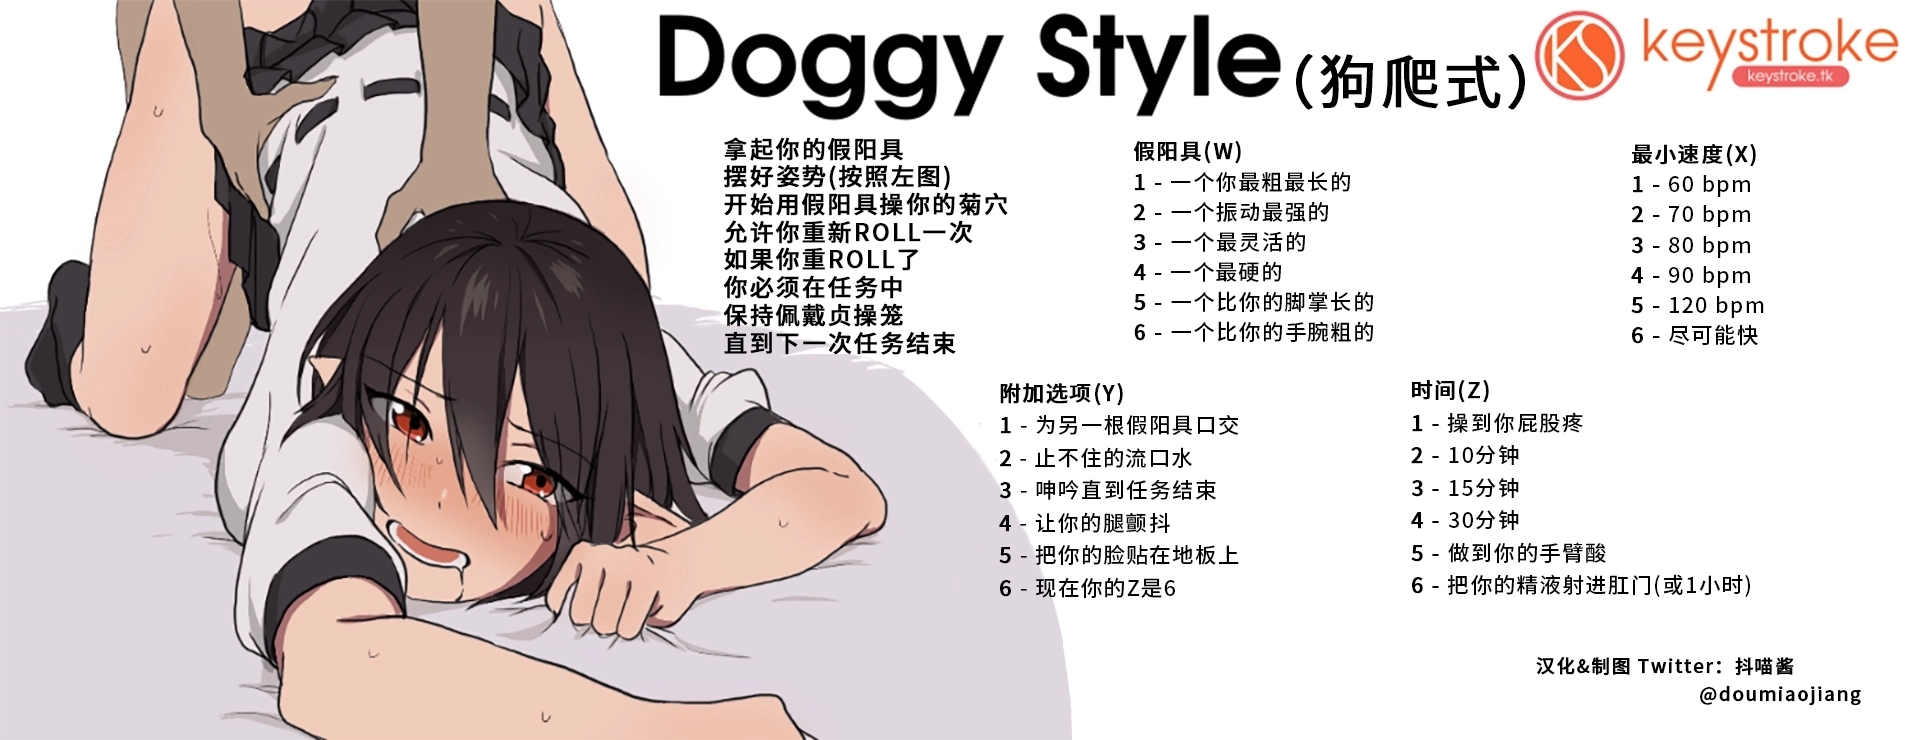 doggy style（狗爬式）.jpg